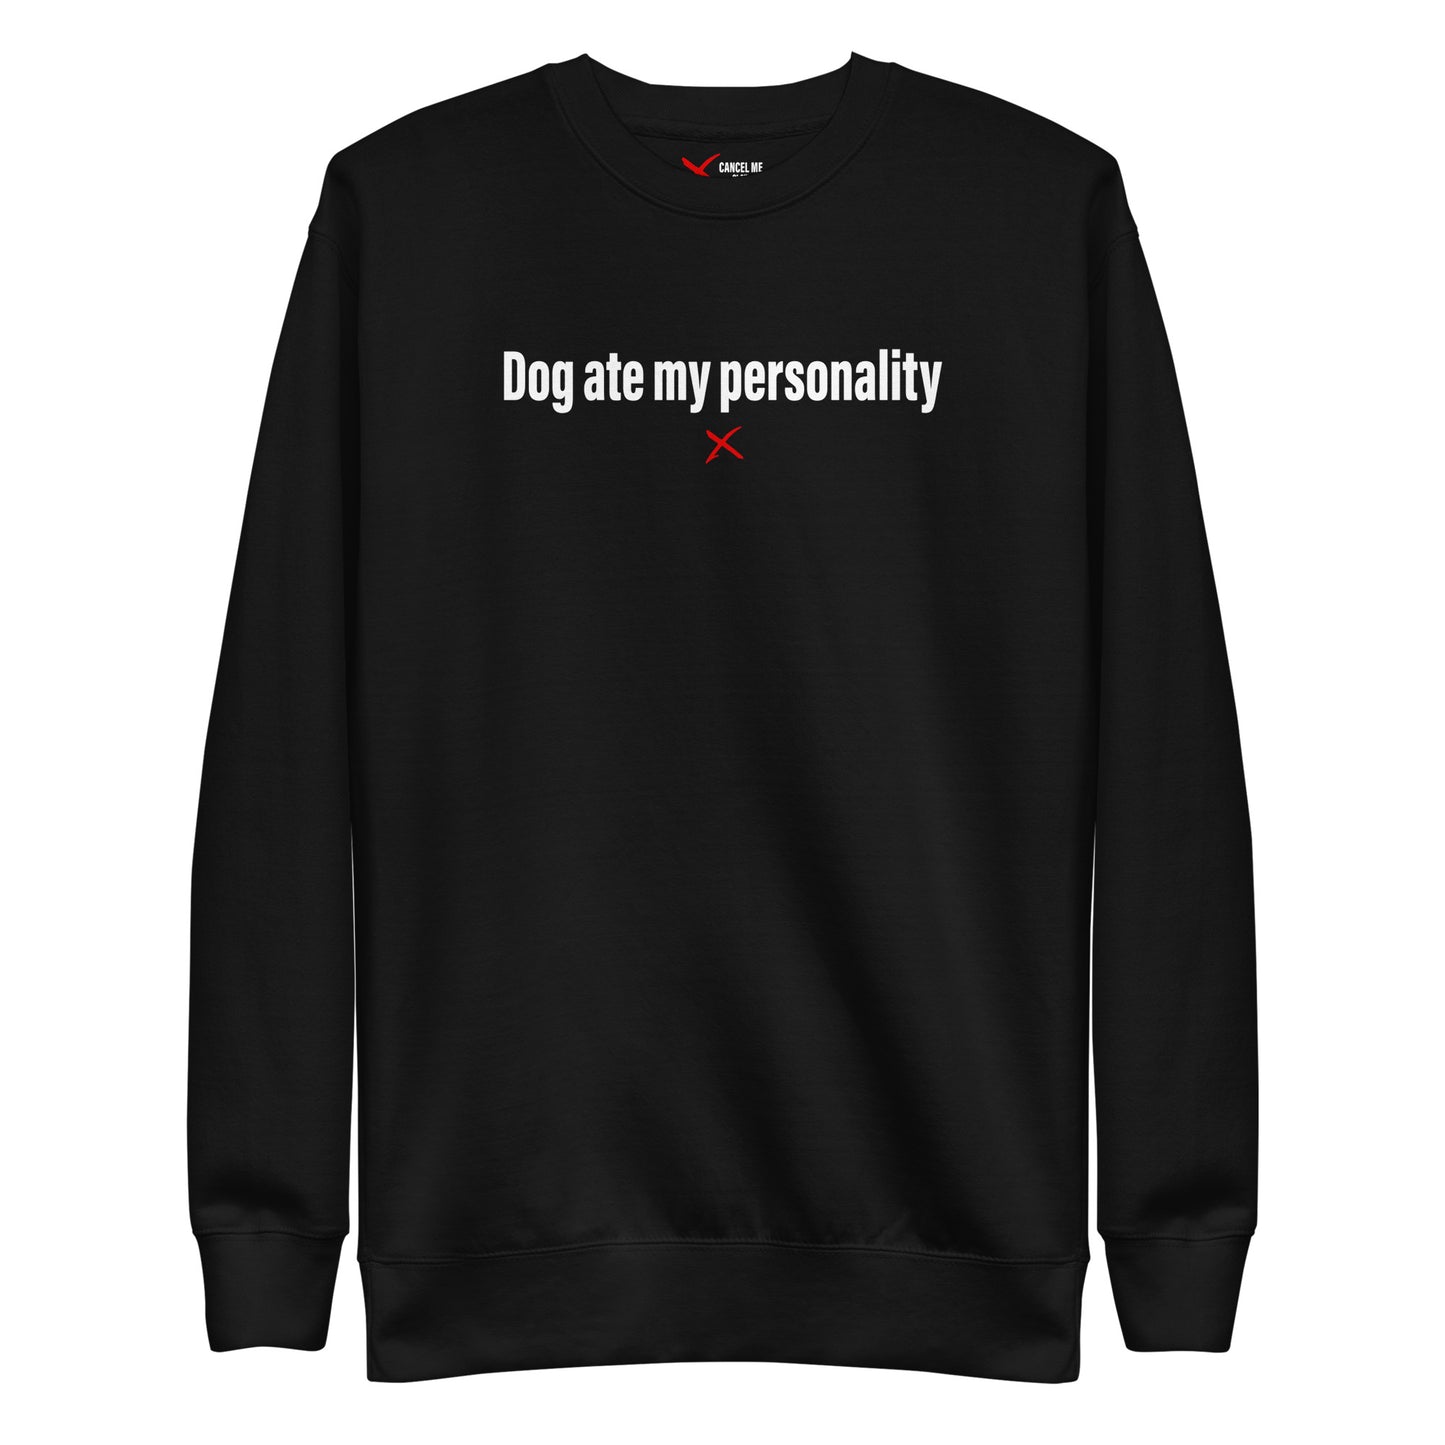 Dog ate my personality - Sweatshirt